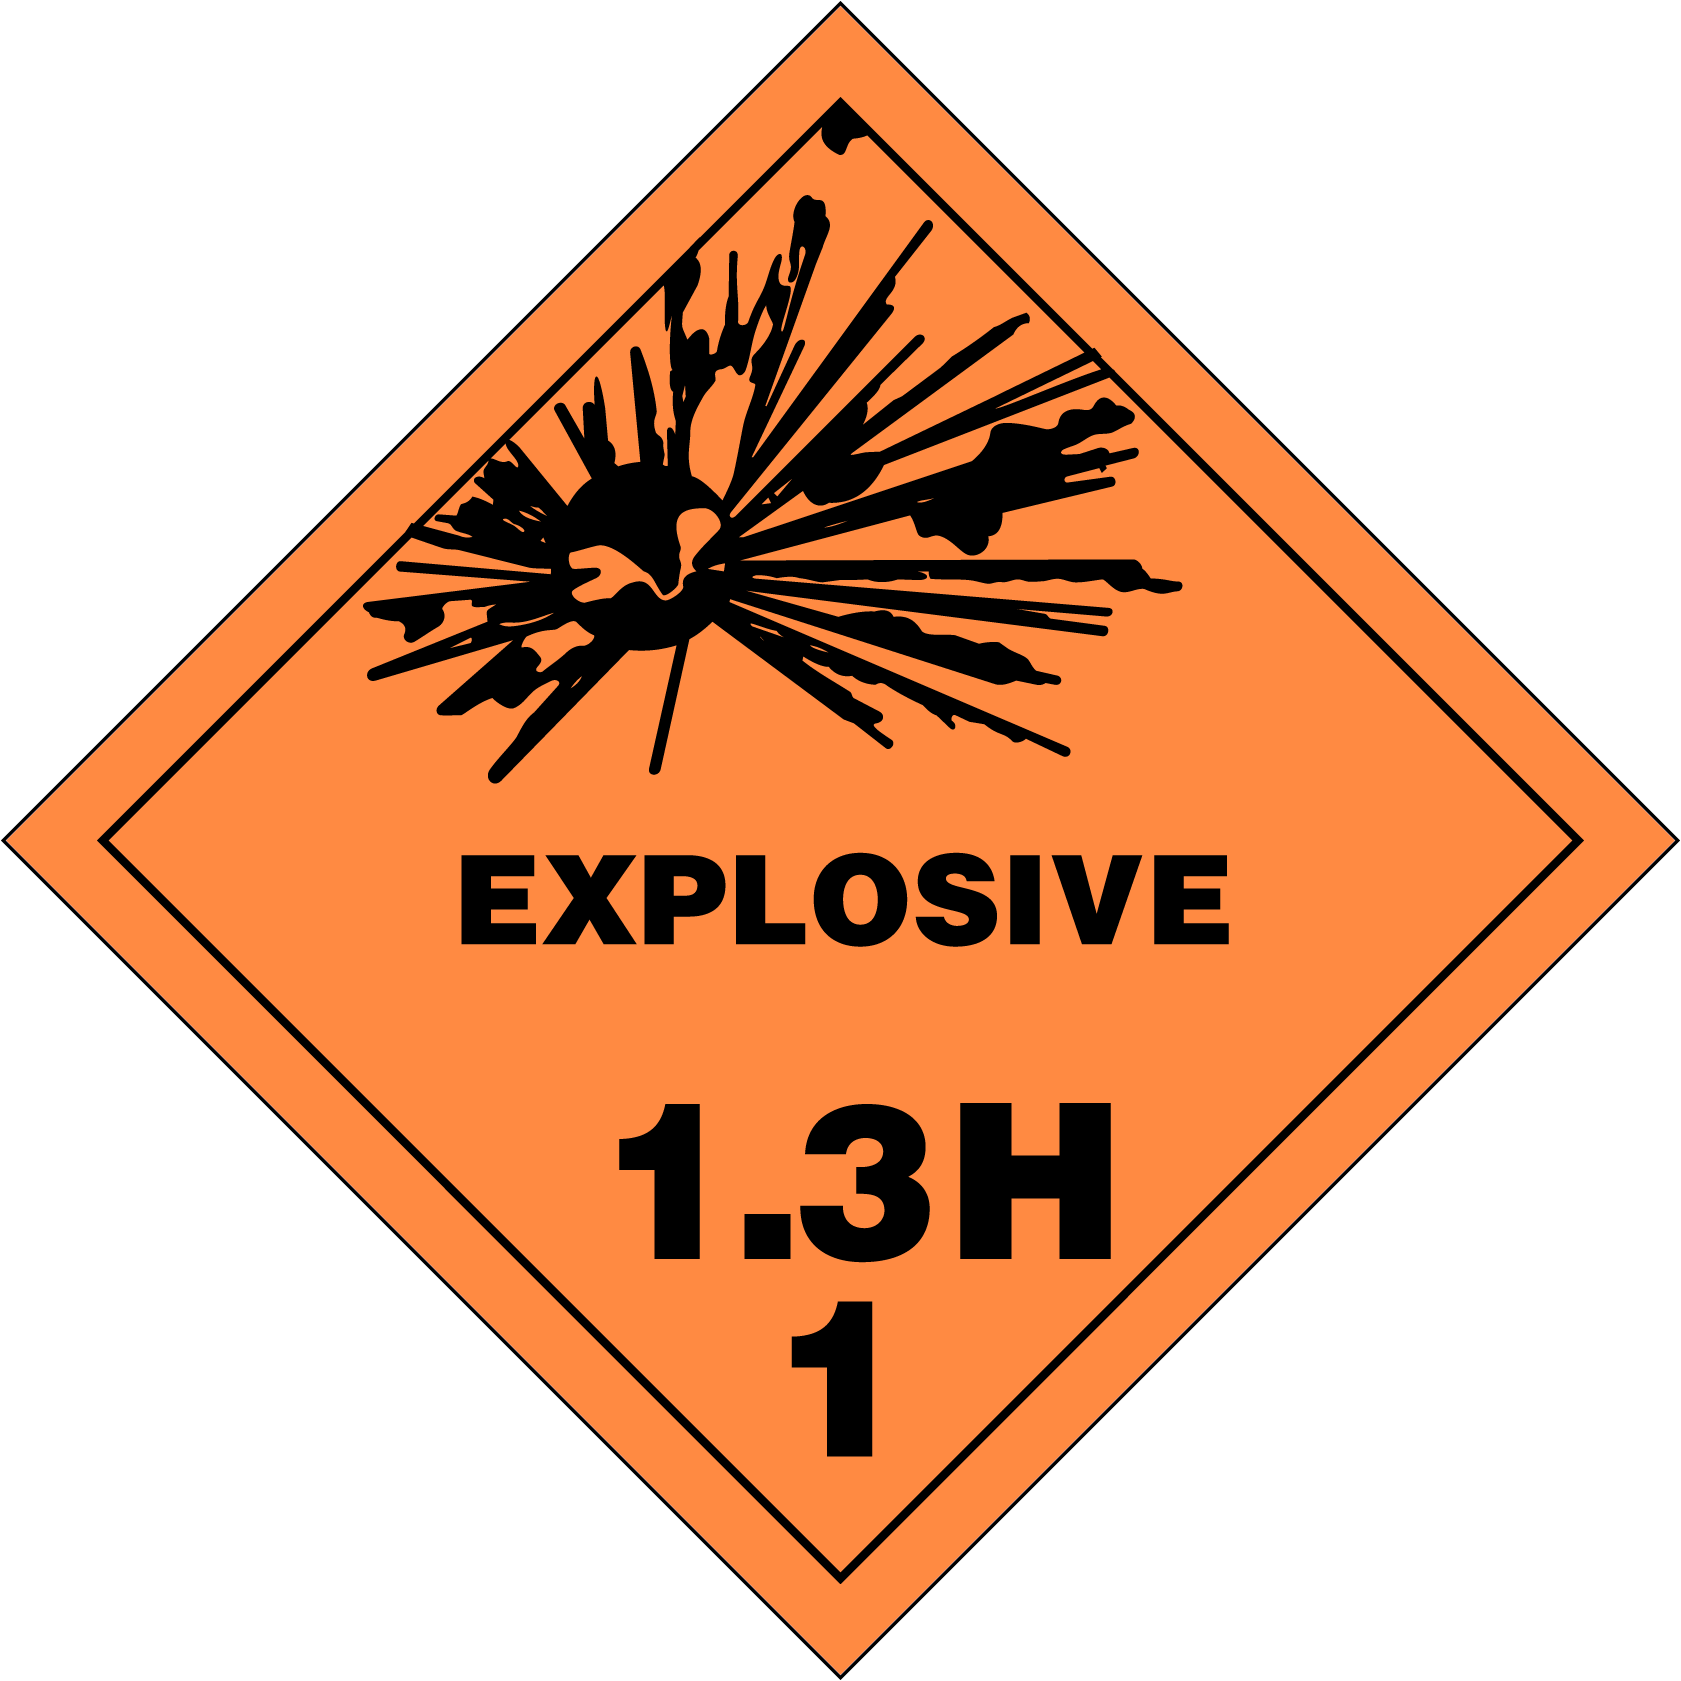 Explosives (1.3H)